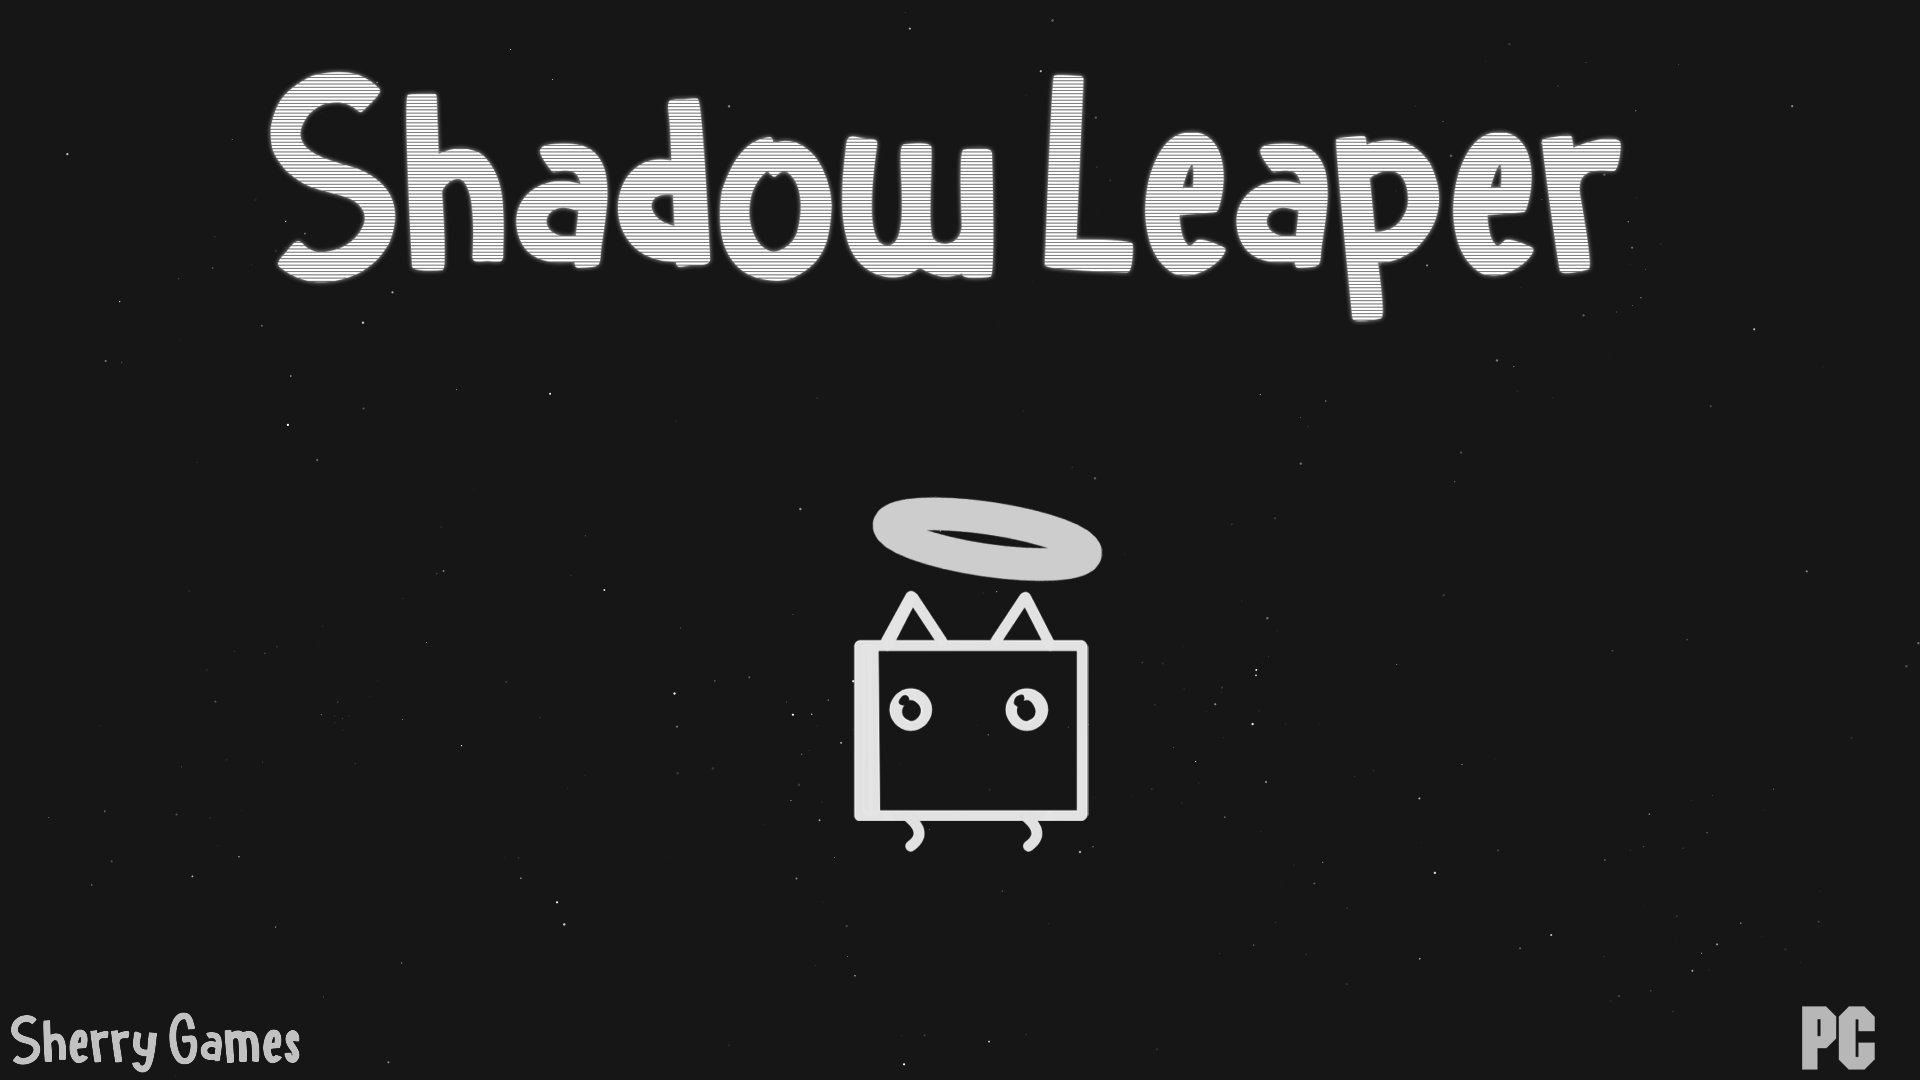 Shadow Leaper